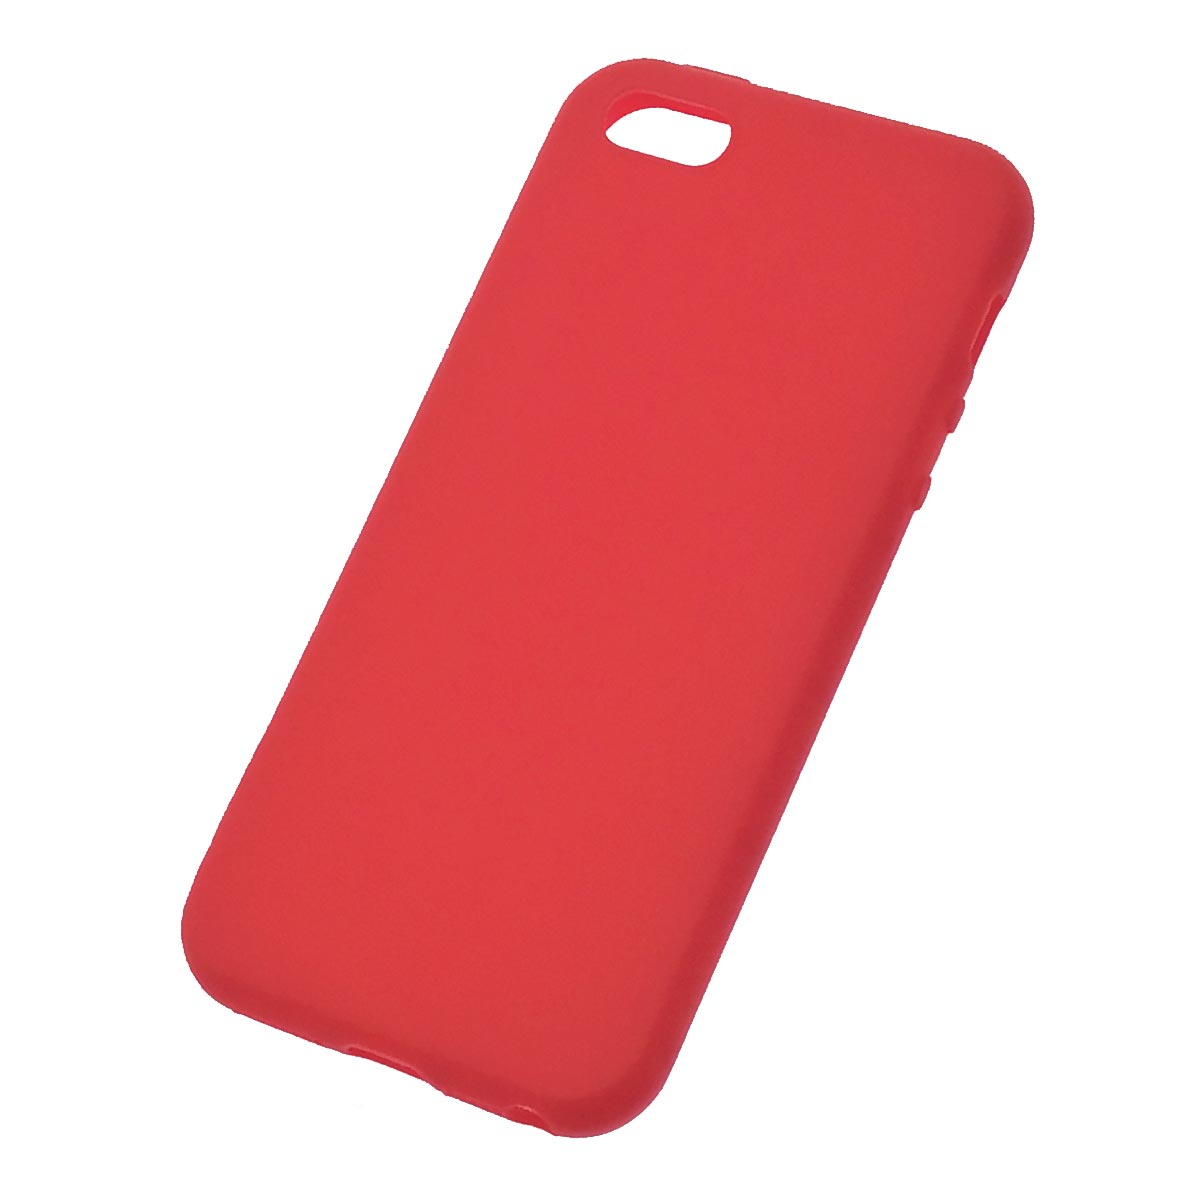 Чехол накладка SOFT TOUCH для APPLE iPhone 5S, iPhone SE, силикон, матовый, цвет красный